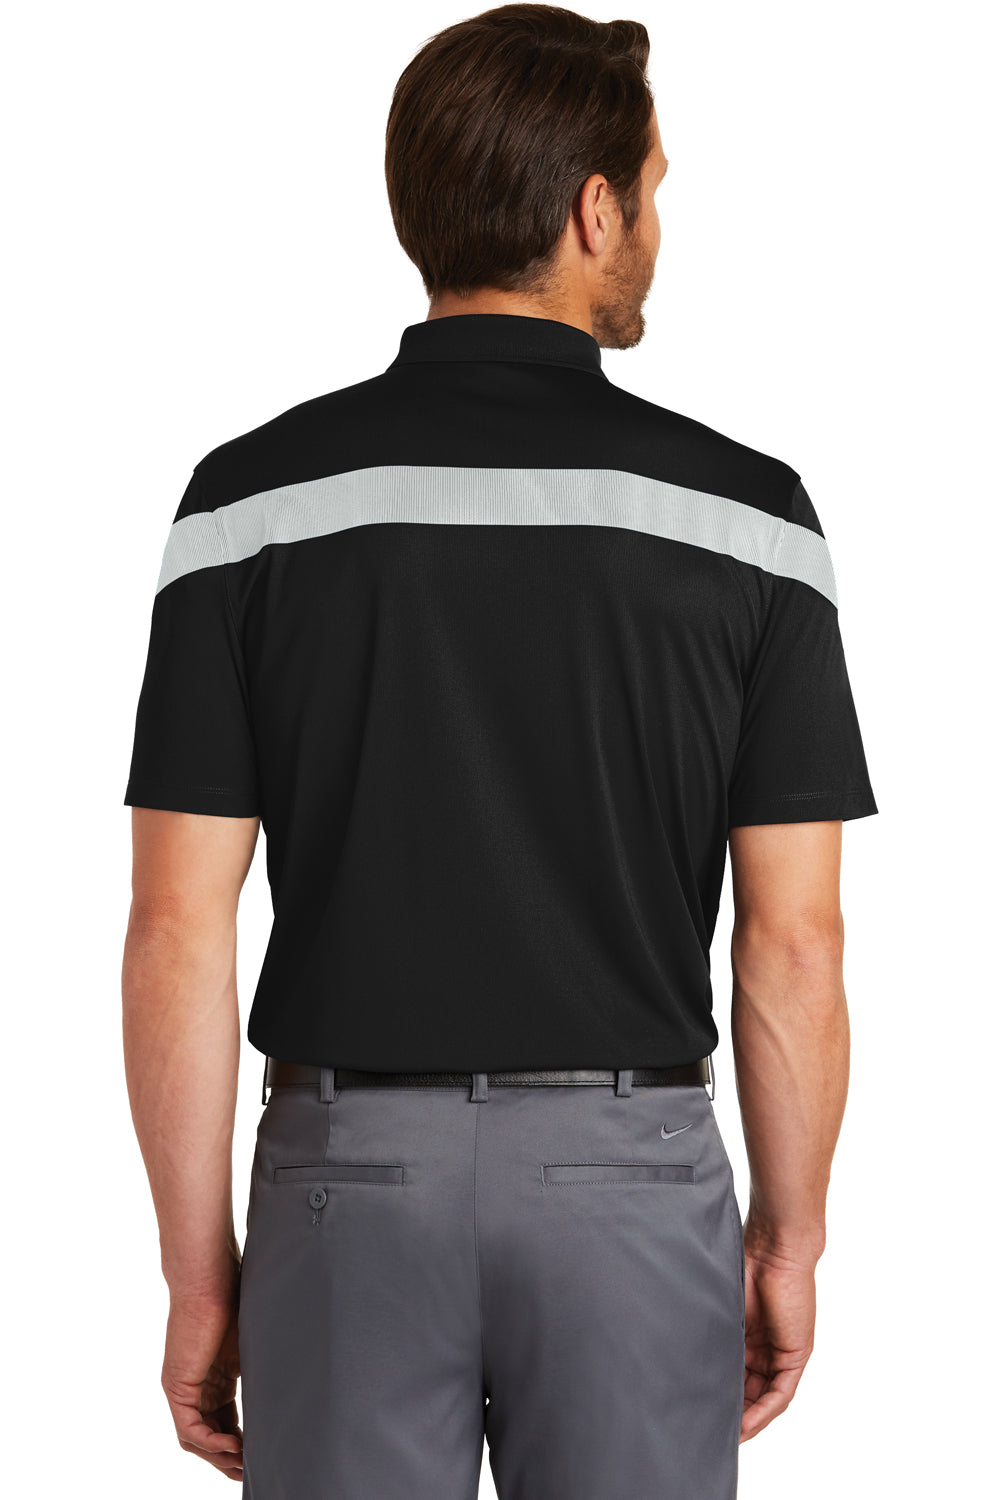 Nike 881657 Mens Commander Dri-Fit Moisture Wicking Short Sleeve Polo Shirt Black/Wolf Grey Back